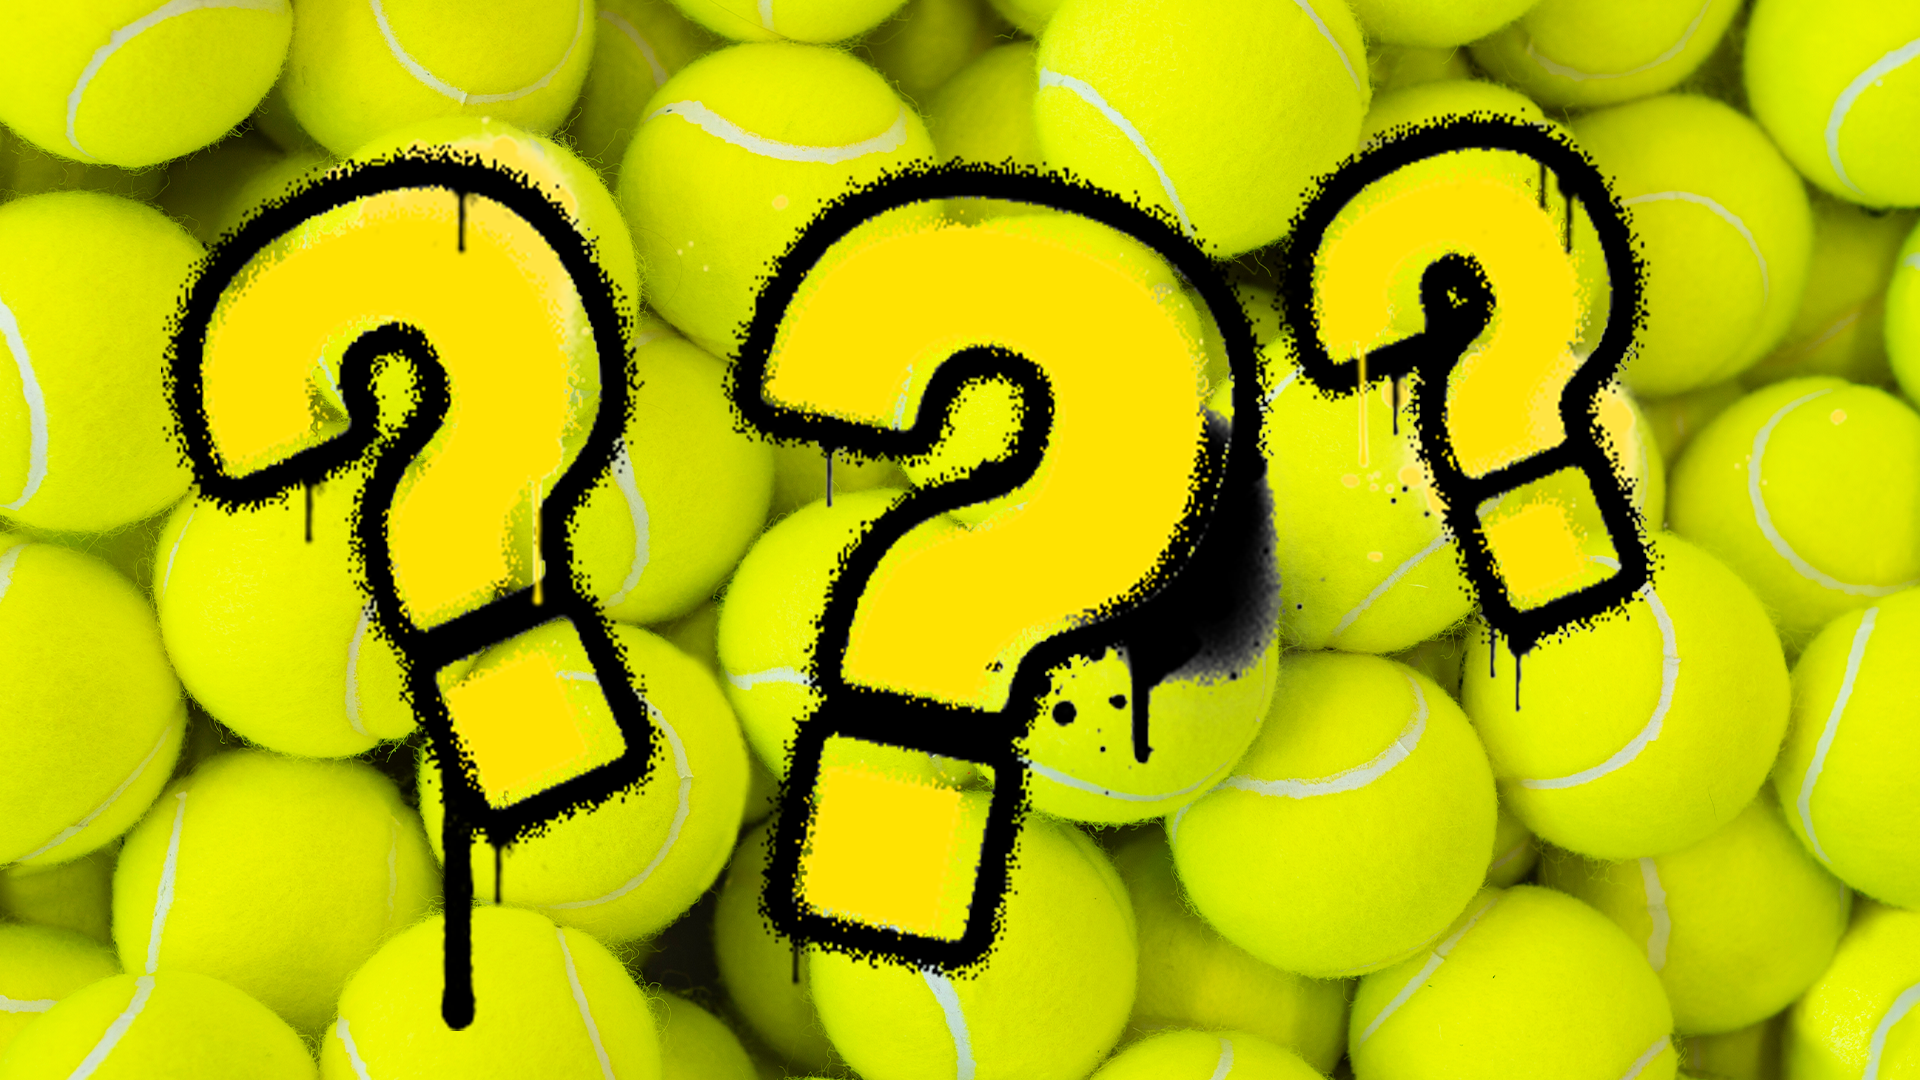 Tennis balls and graffiti question marks 